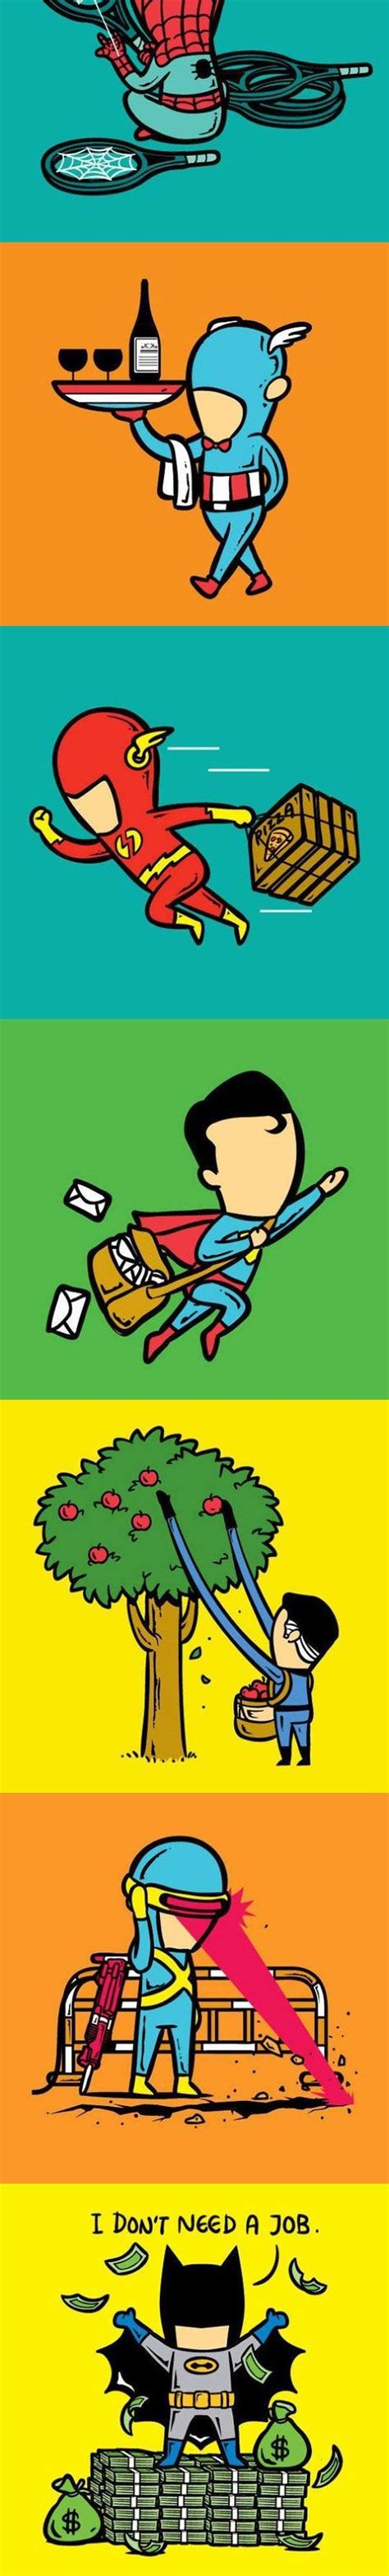 spandex and all valentine s day funny superhero marvel dc comics